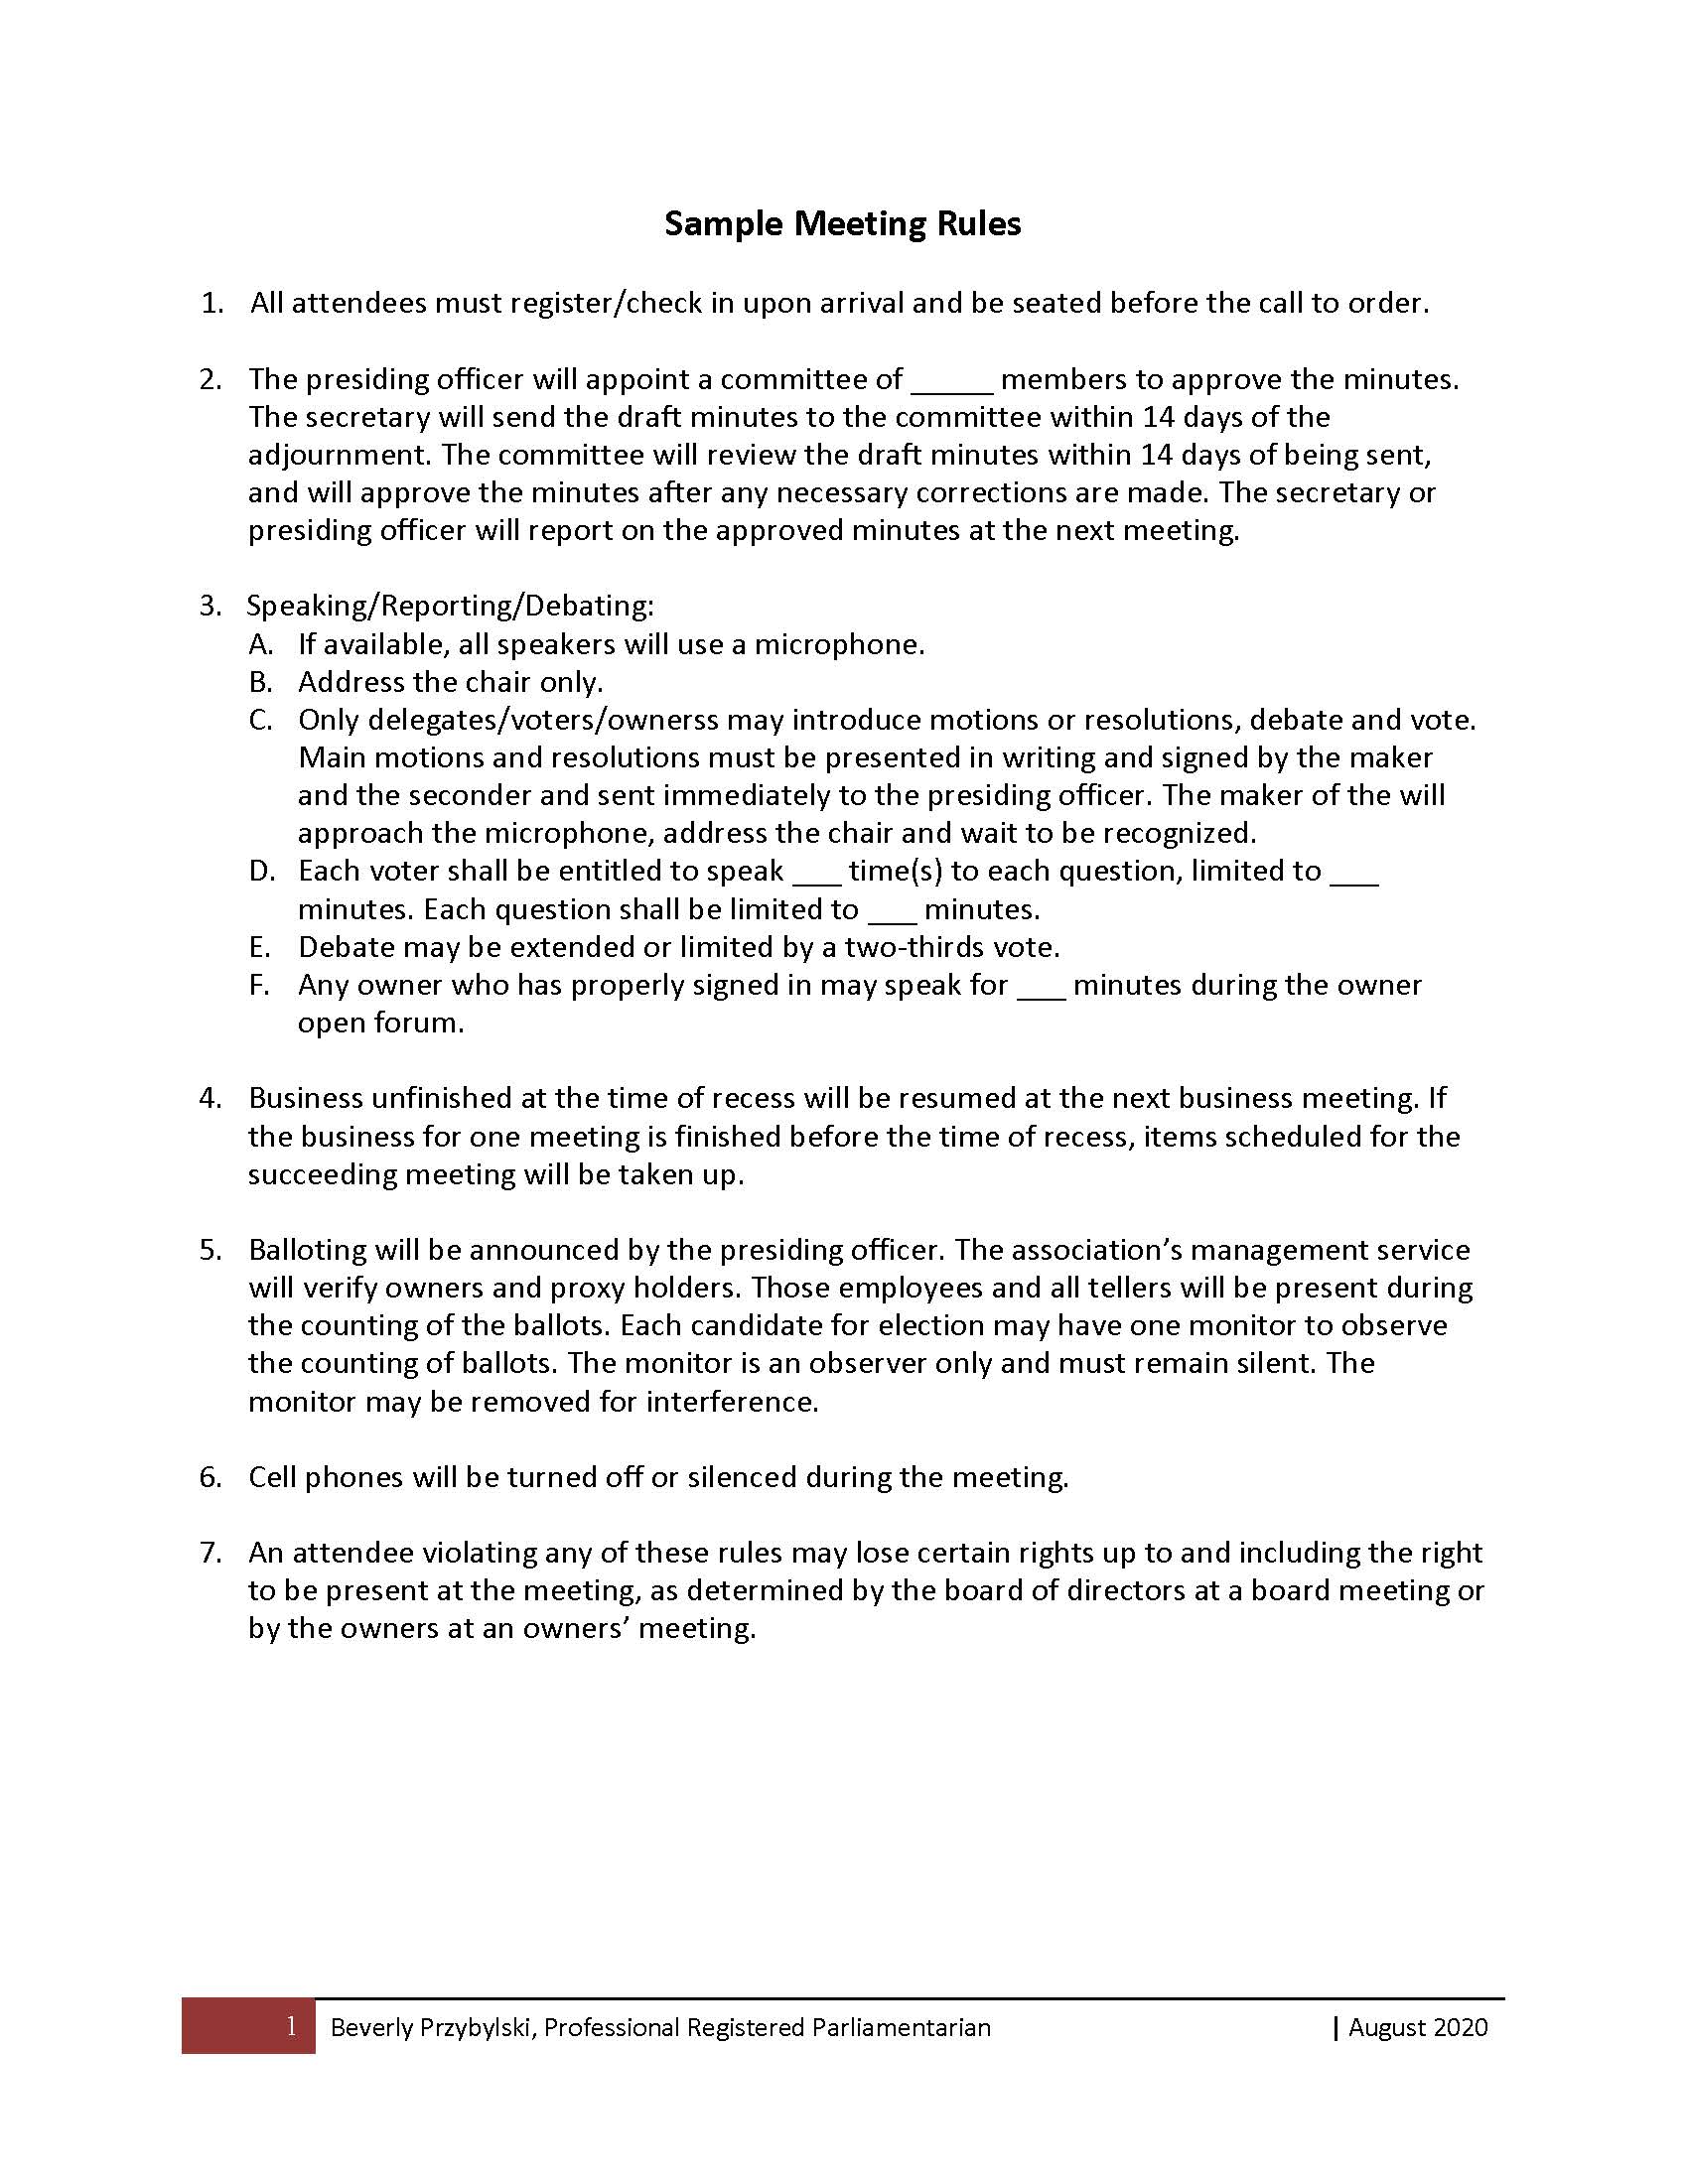 Sample Meeting Rules (HOA)